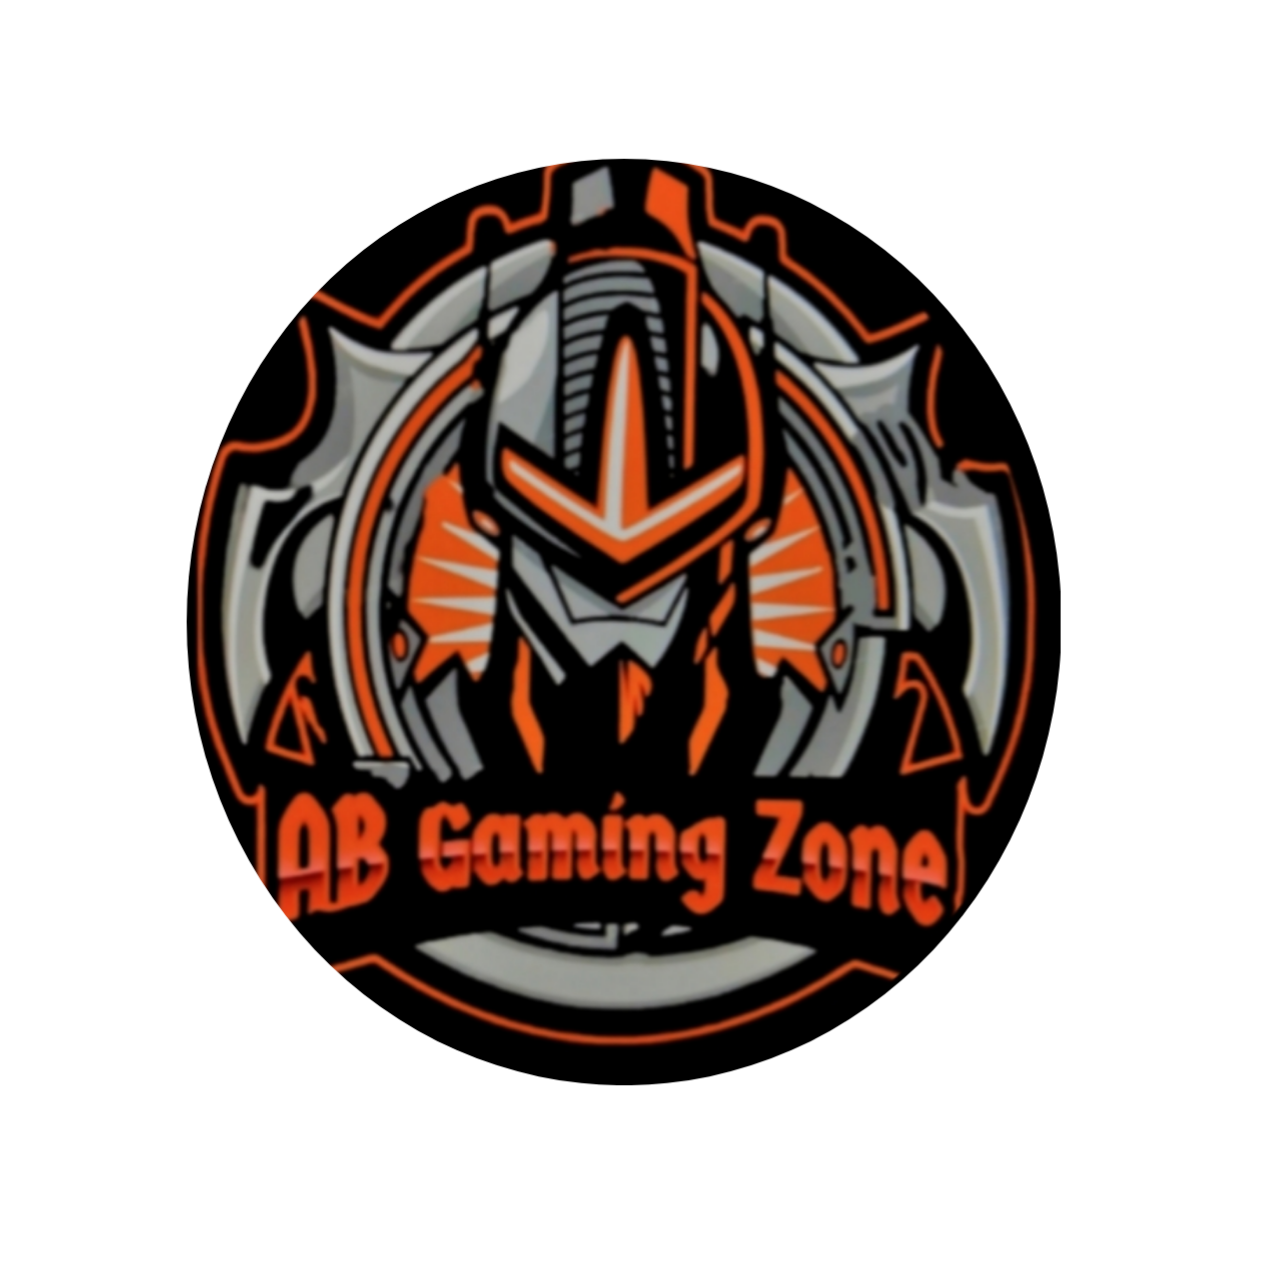 AB Gaming Zone